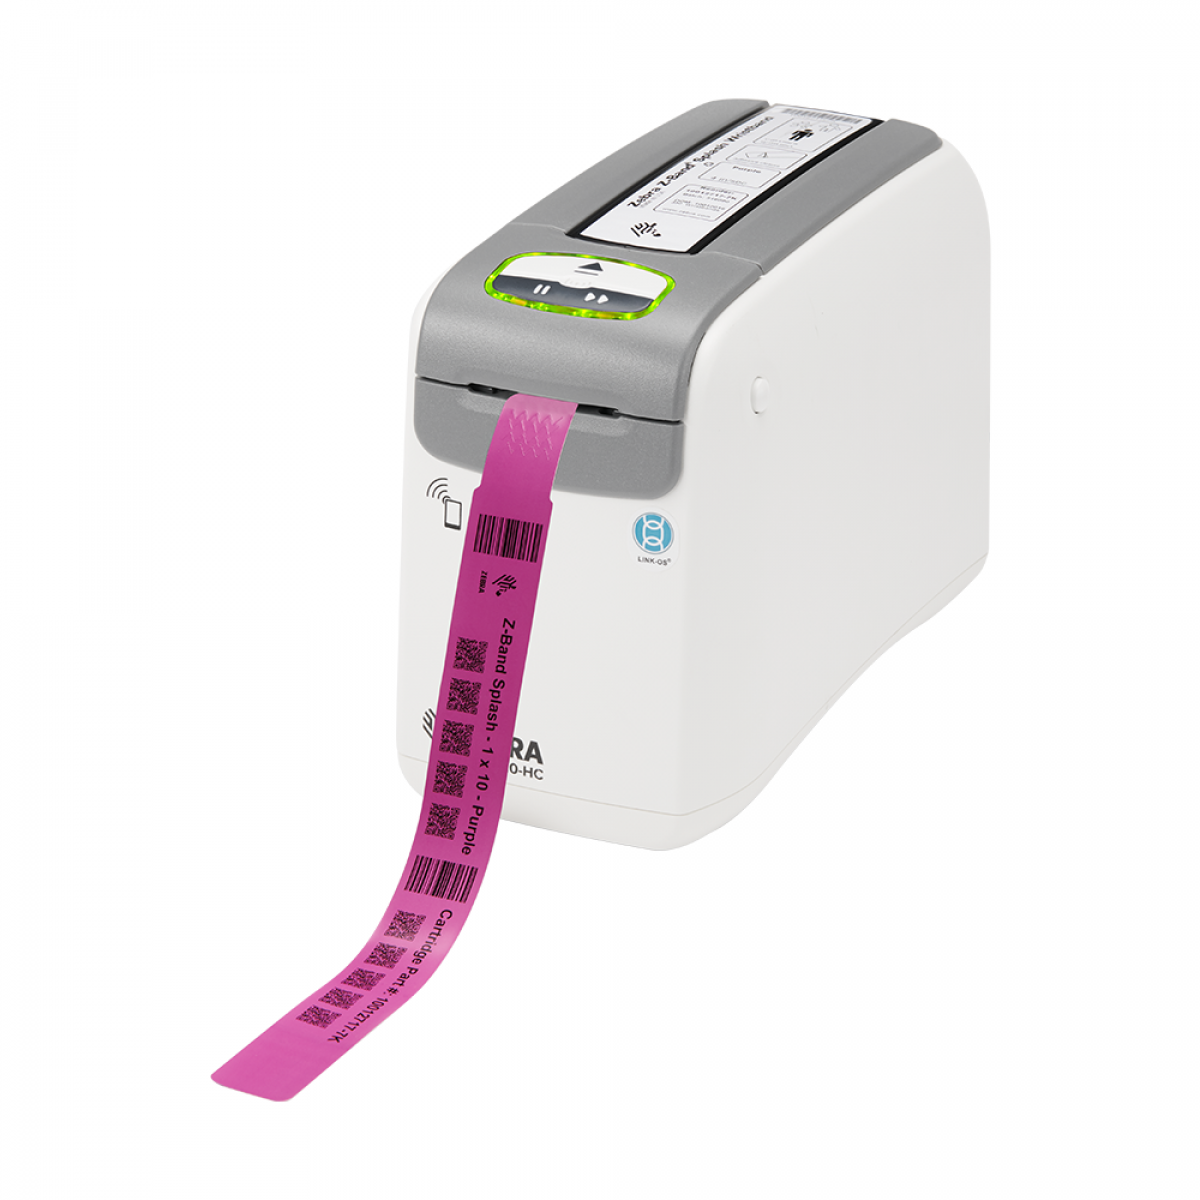 Zebra-ZD510-HC printer with fun splash wristband